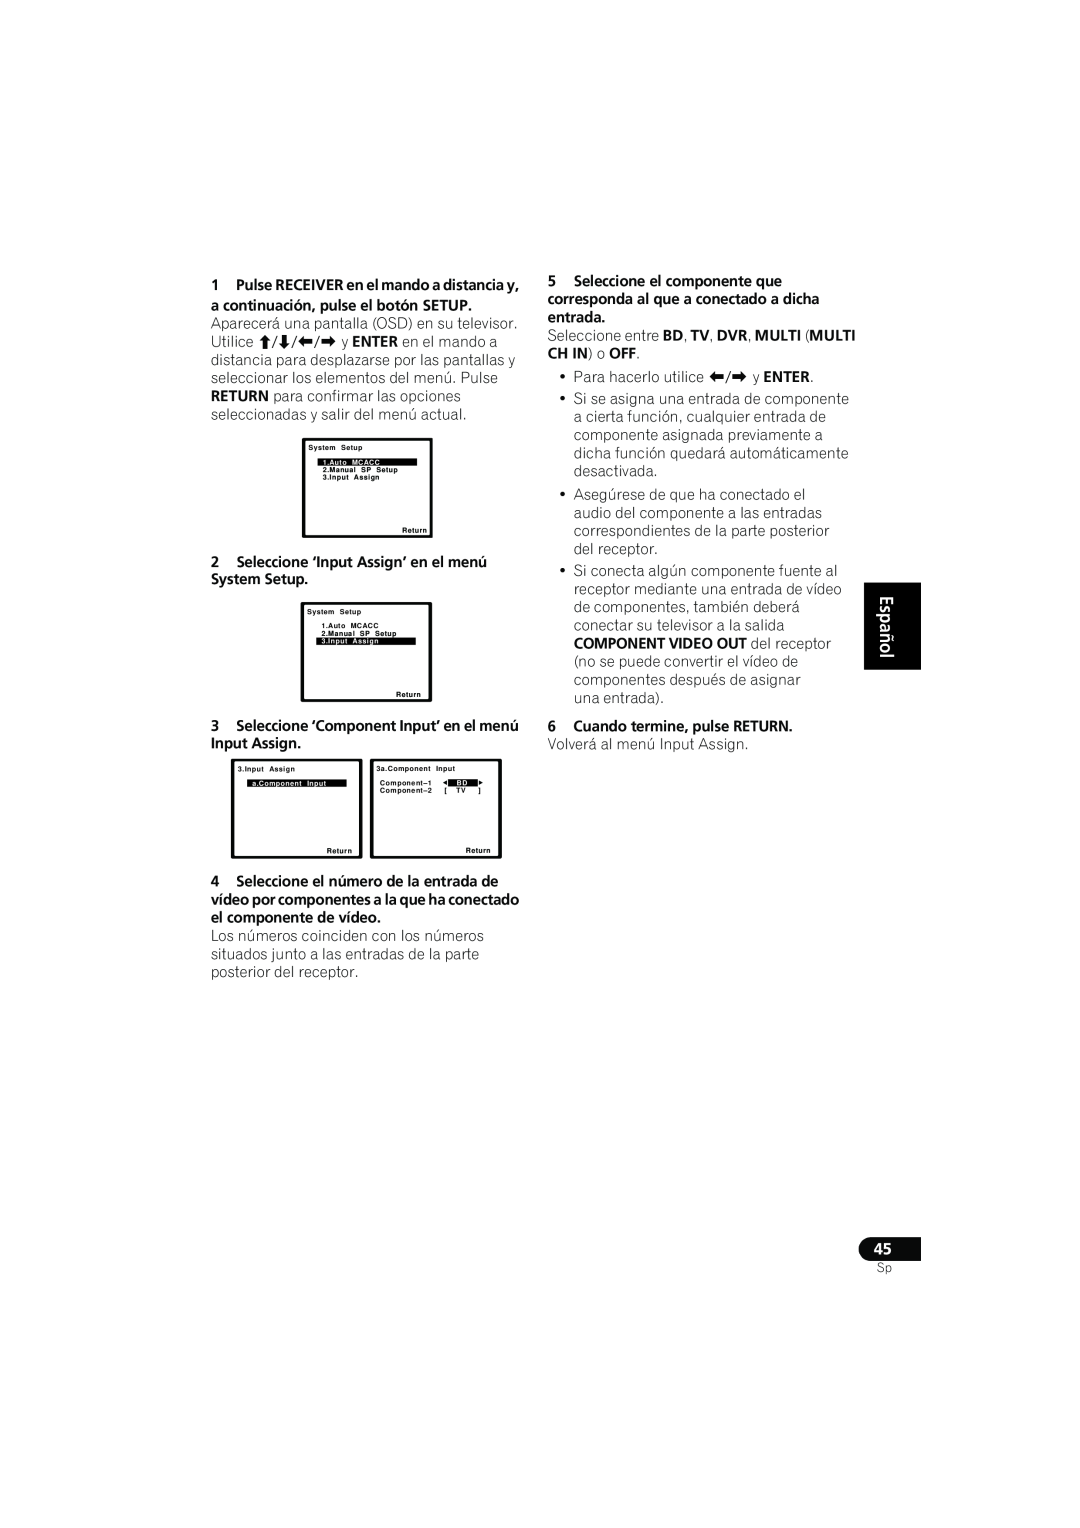 Pioneer VSX-819H-K manual English Français Español, 2Seleccione ‘Input Assign’ en el menú System Setup 